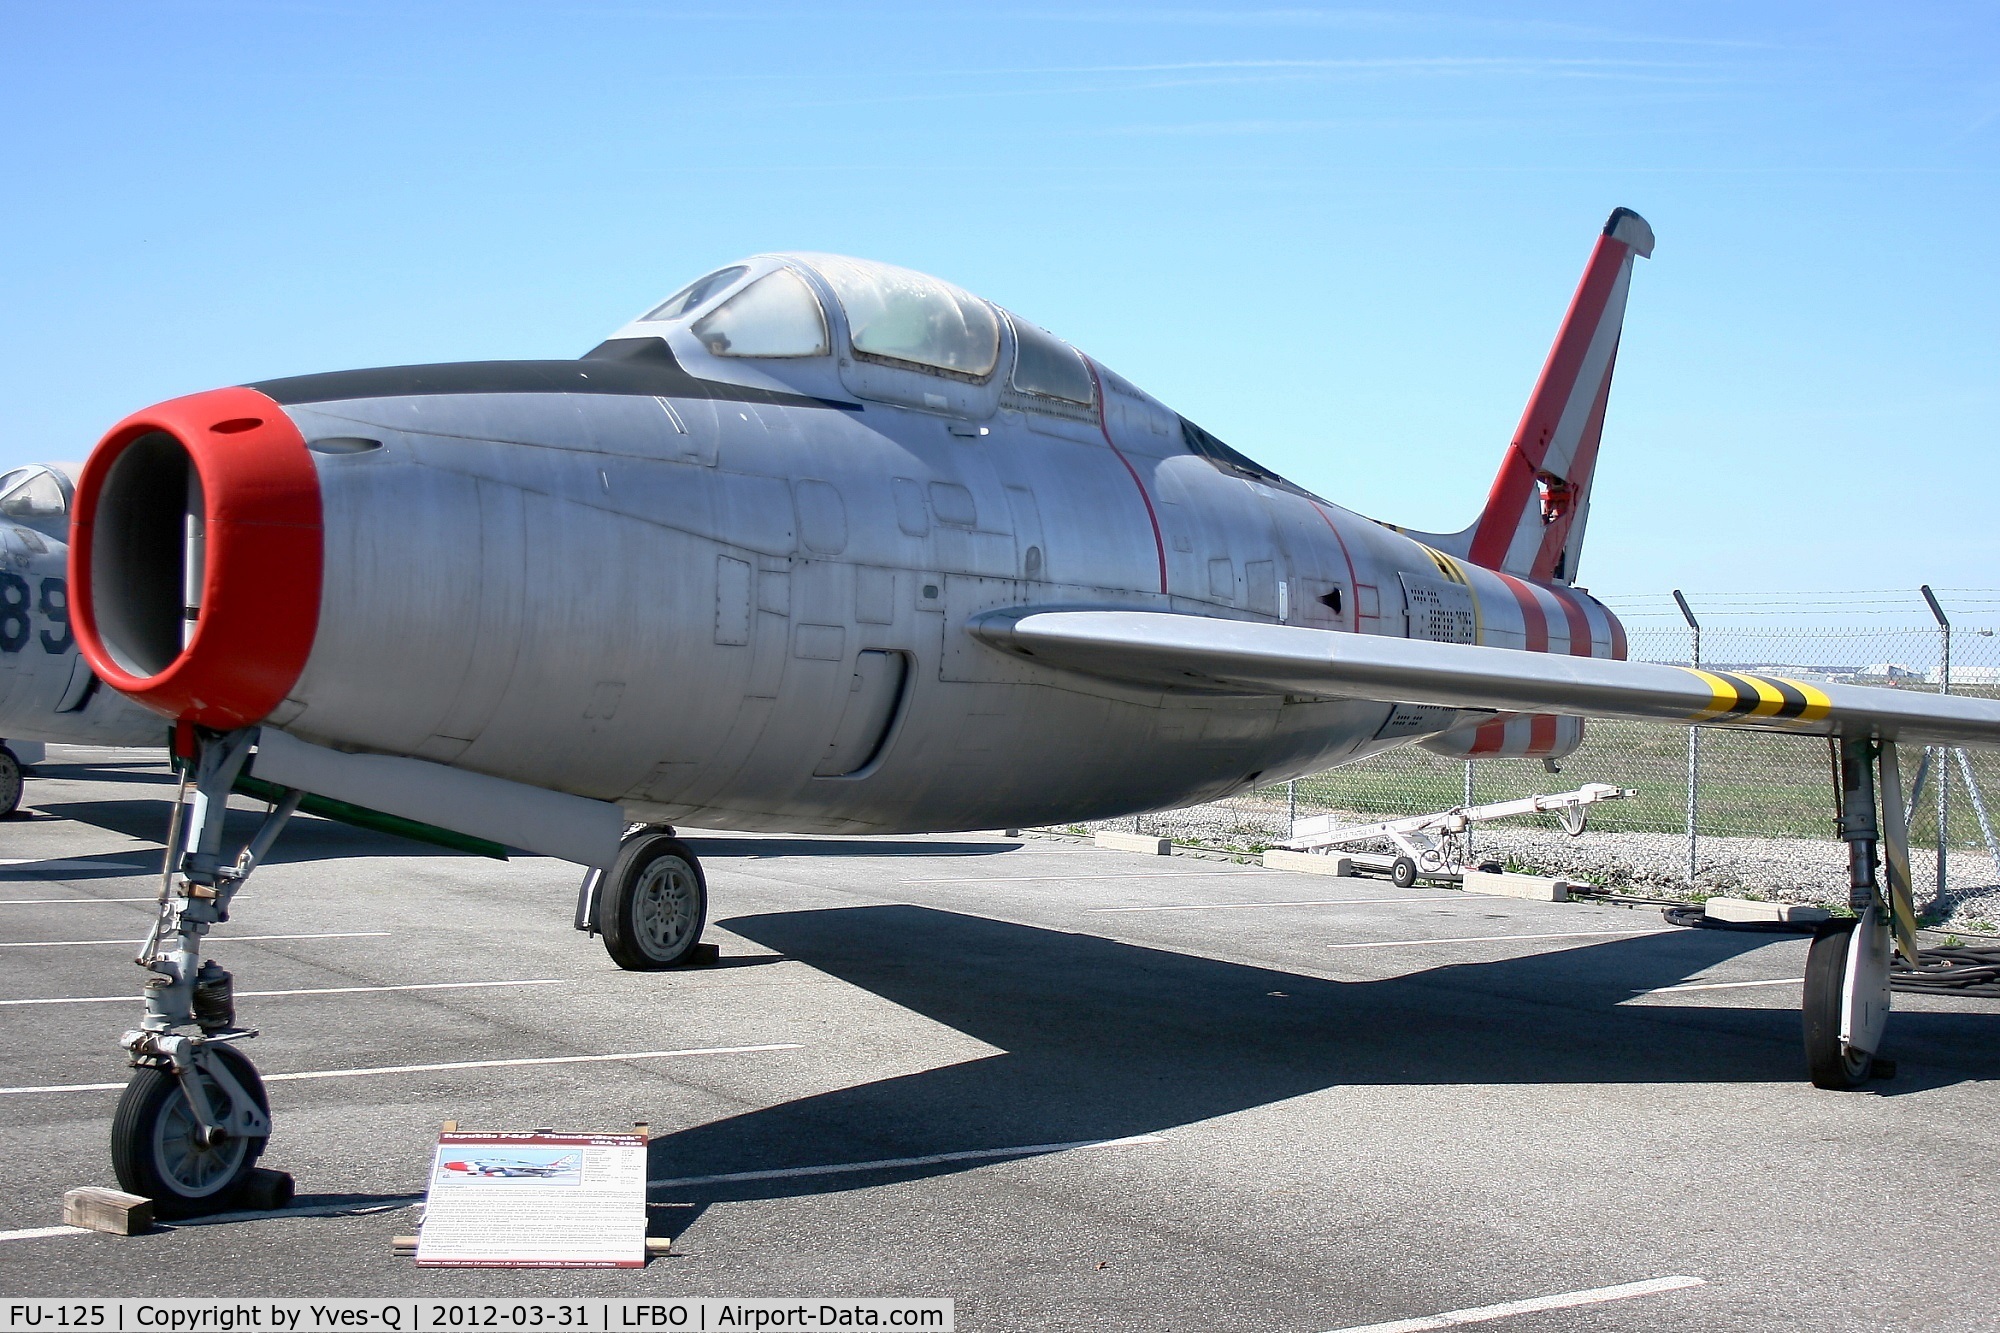 FU-125, Republic F-84F Thunderstreak C/N Not found 53-6760, Republic F-84F Thunderstreak, Ailes Anciennes Museum Toulouse-Blagnac